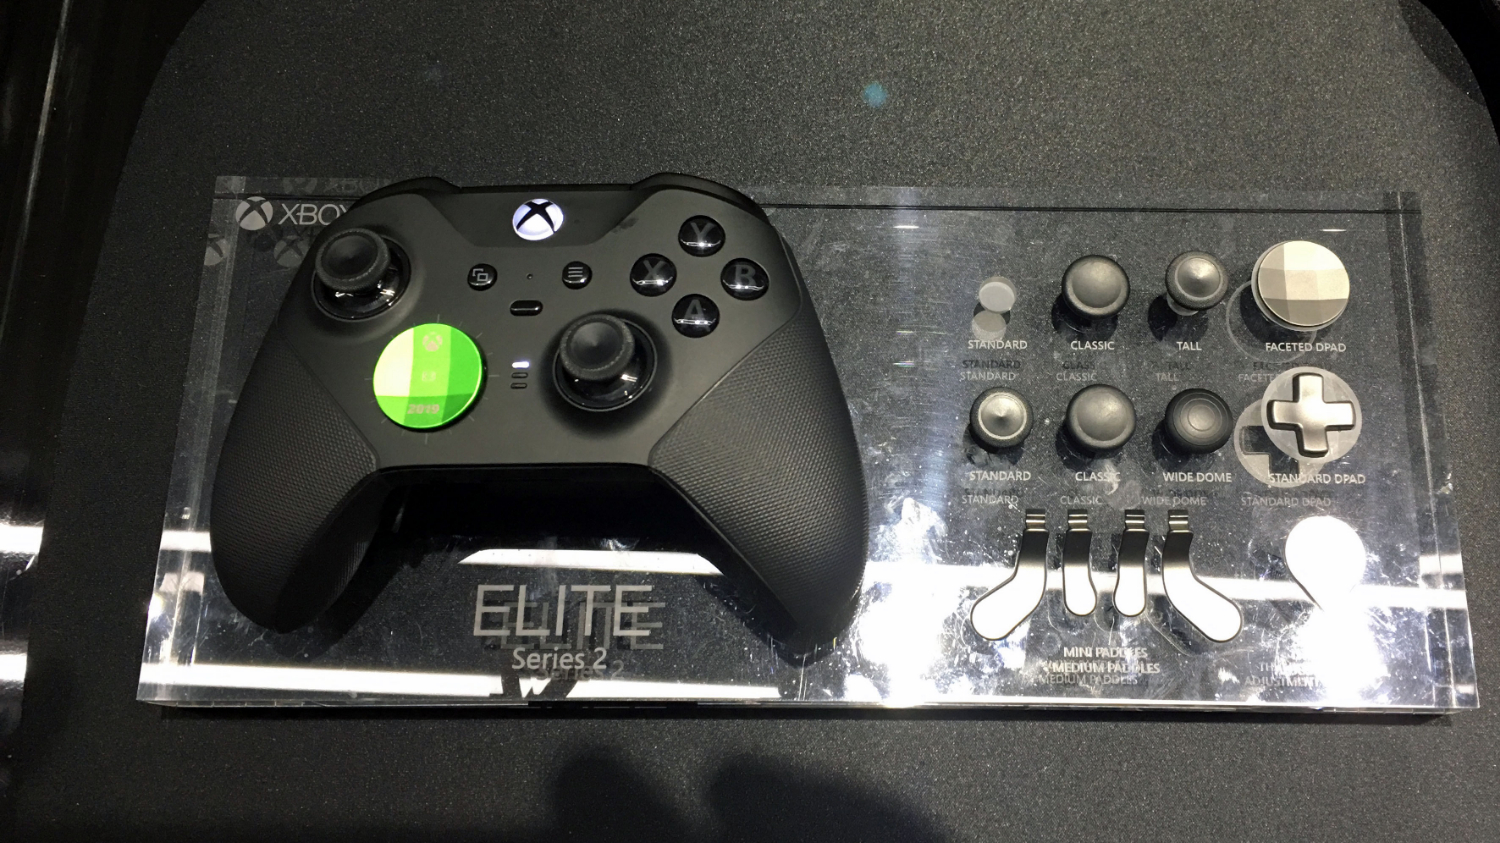 xbox elite controller stick tension